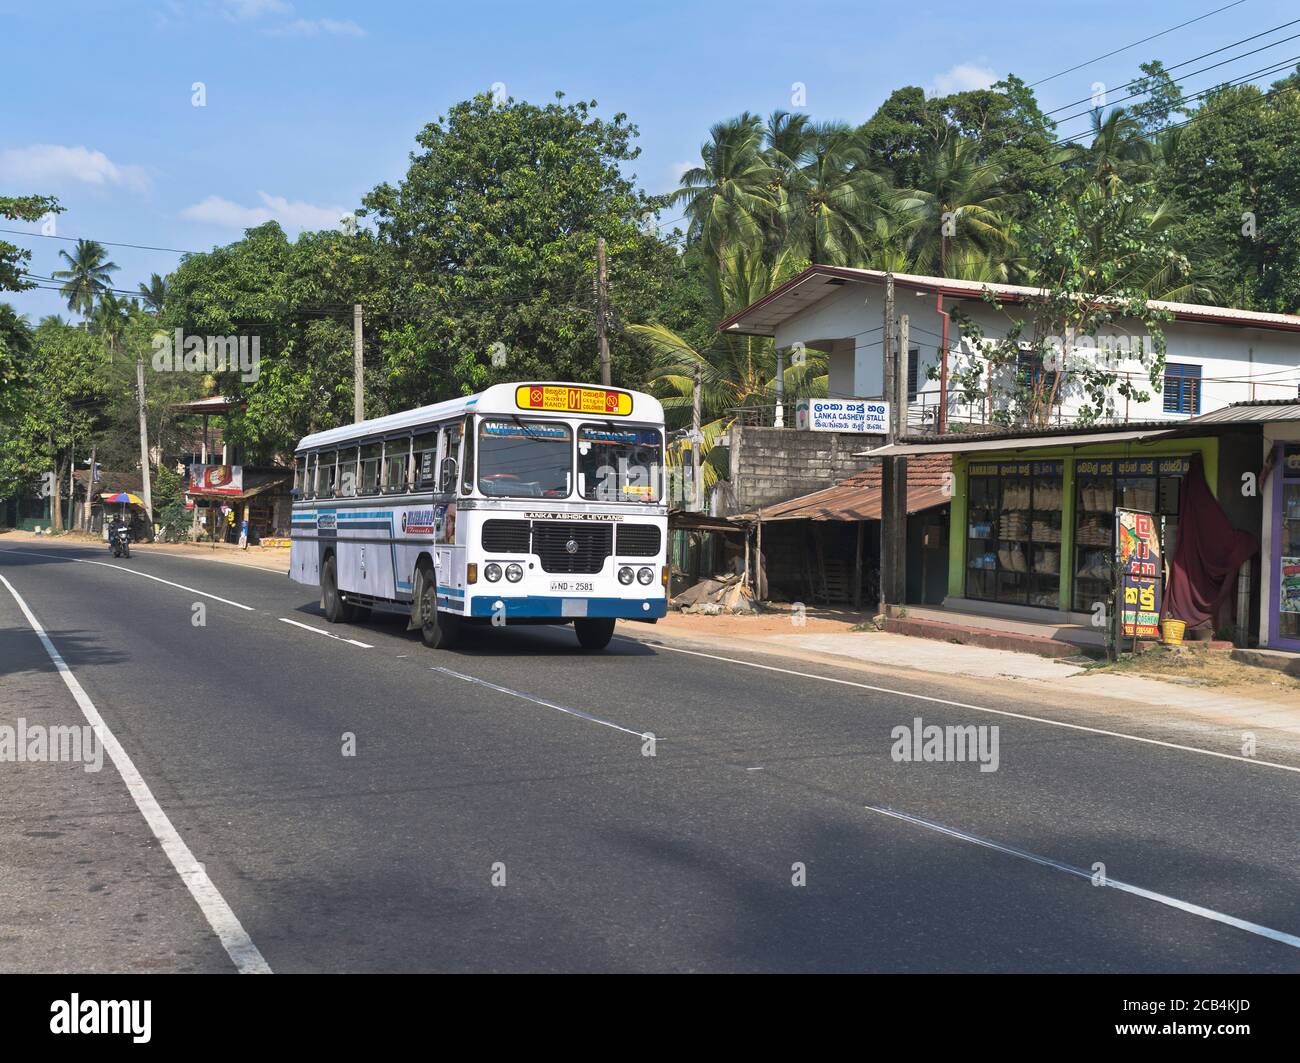 dh Hauptstraße KANDY NACH COLOMBO SRI LANKA Leyland ashok Lokale blaue Bus öffentlichen Verkehrsmitteln ländlichen Land sri lanka Busse Reisen nach asien Stockfoto